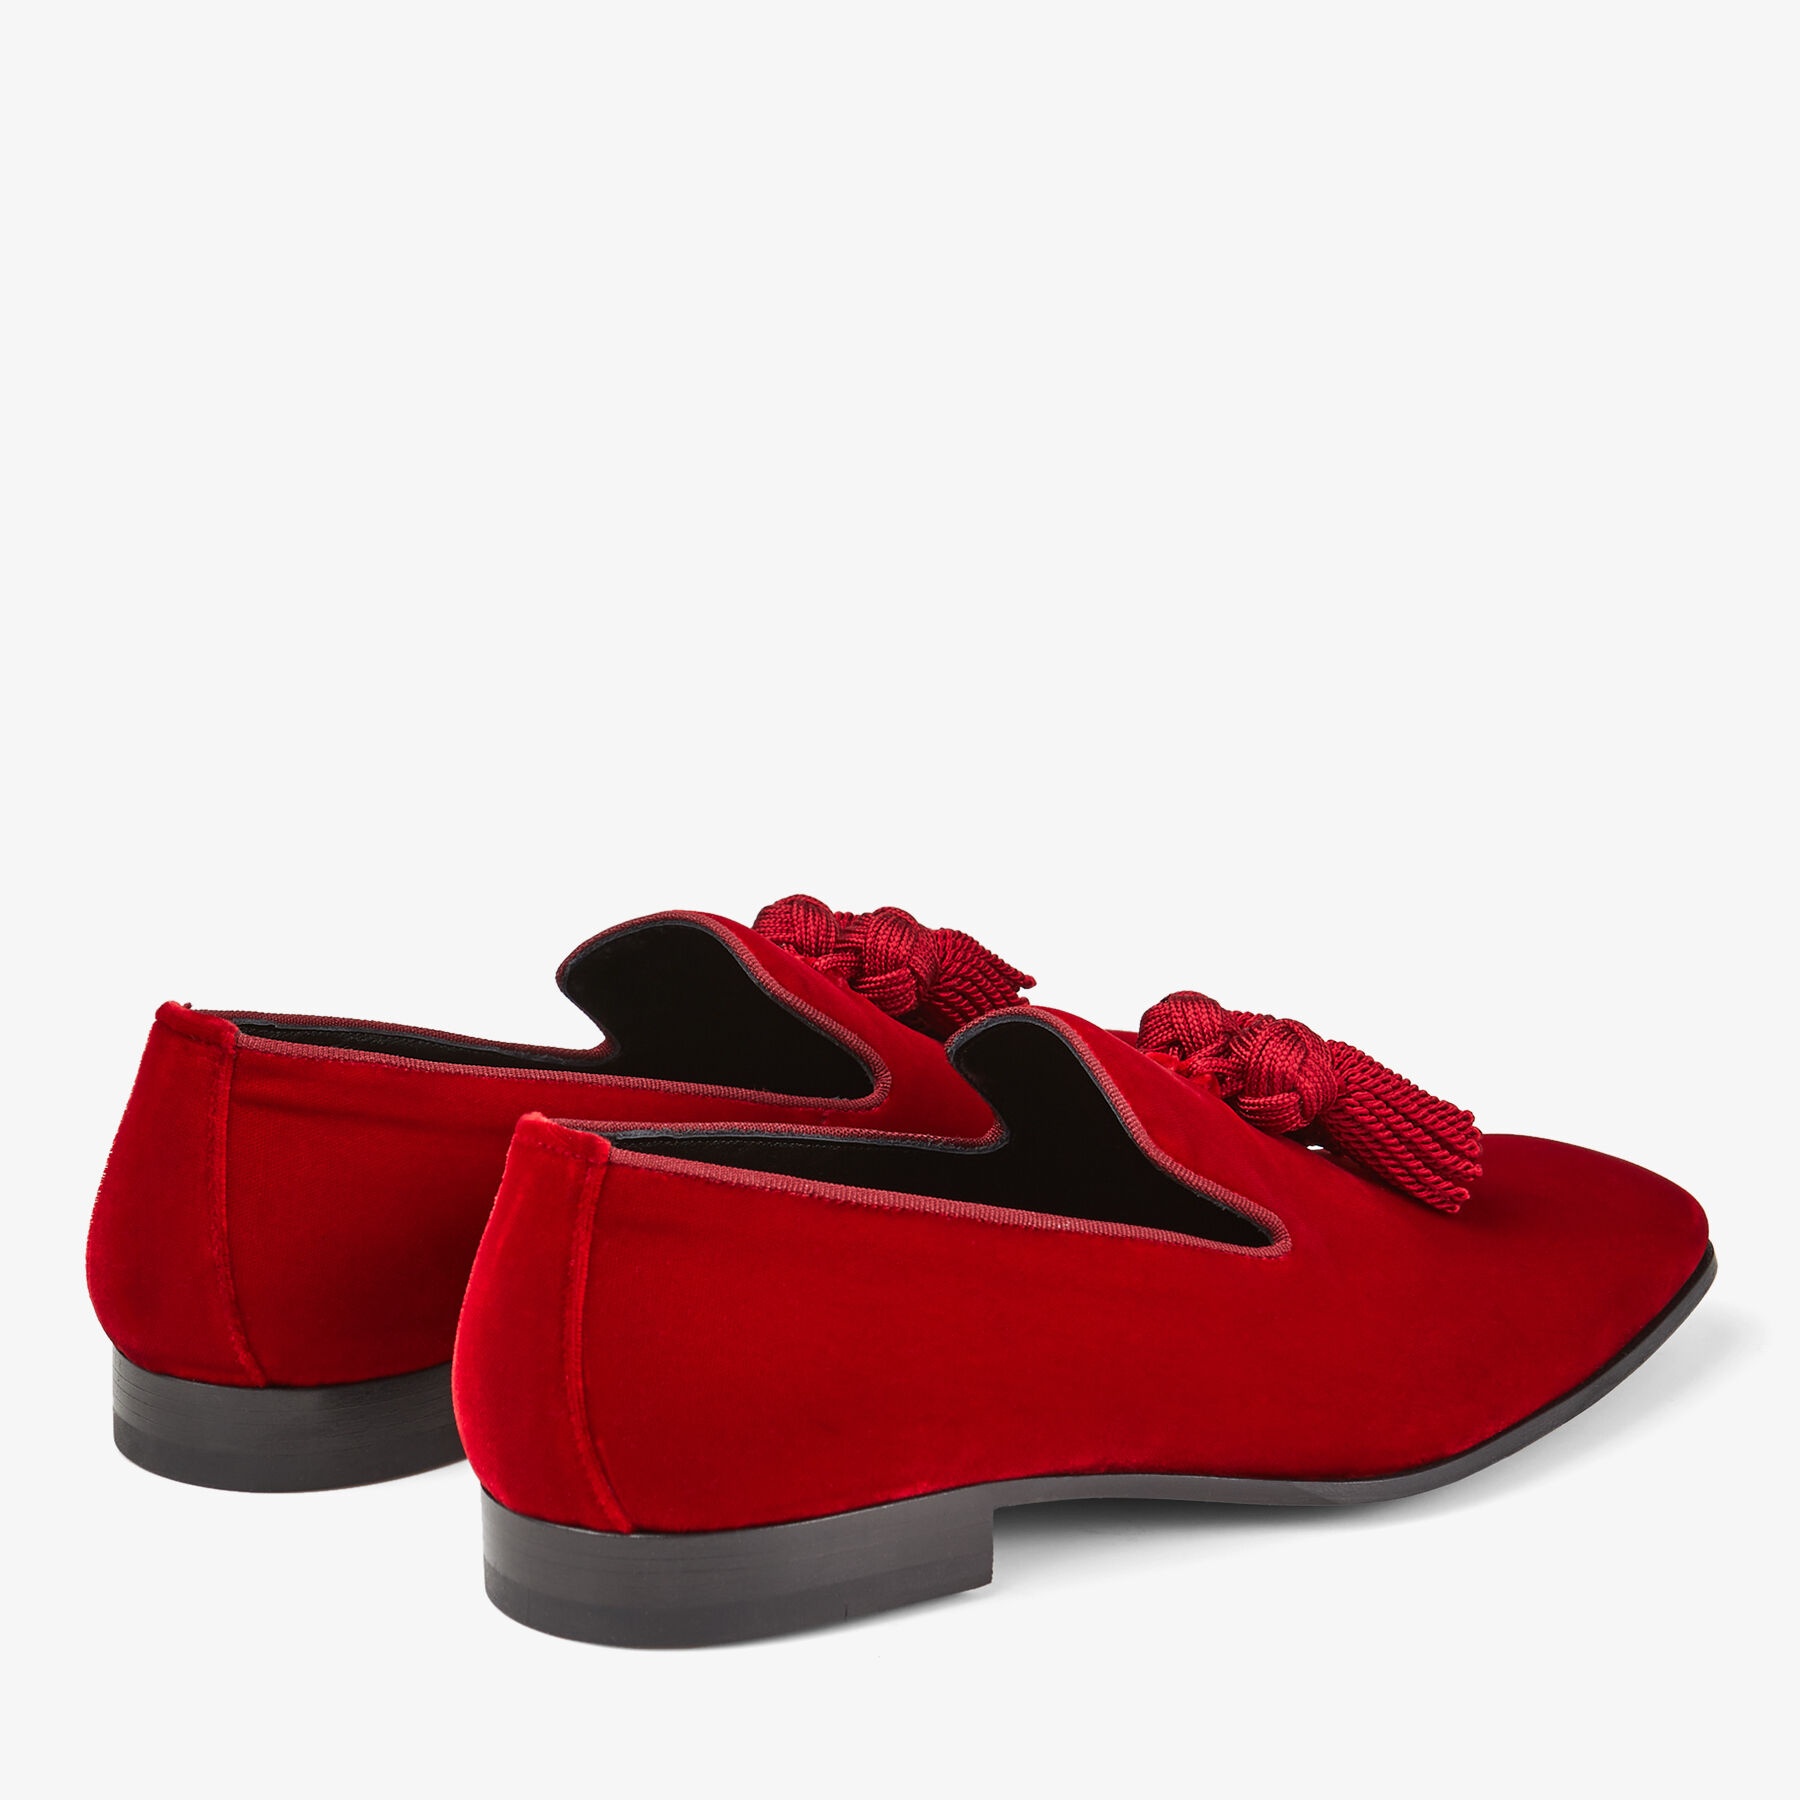 Foxley/M
Red Velvet Slip-On Shoes with Tassel - 4